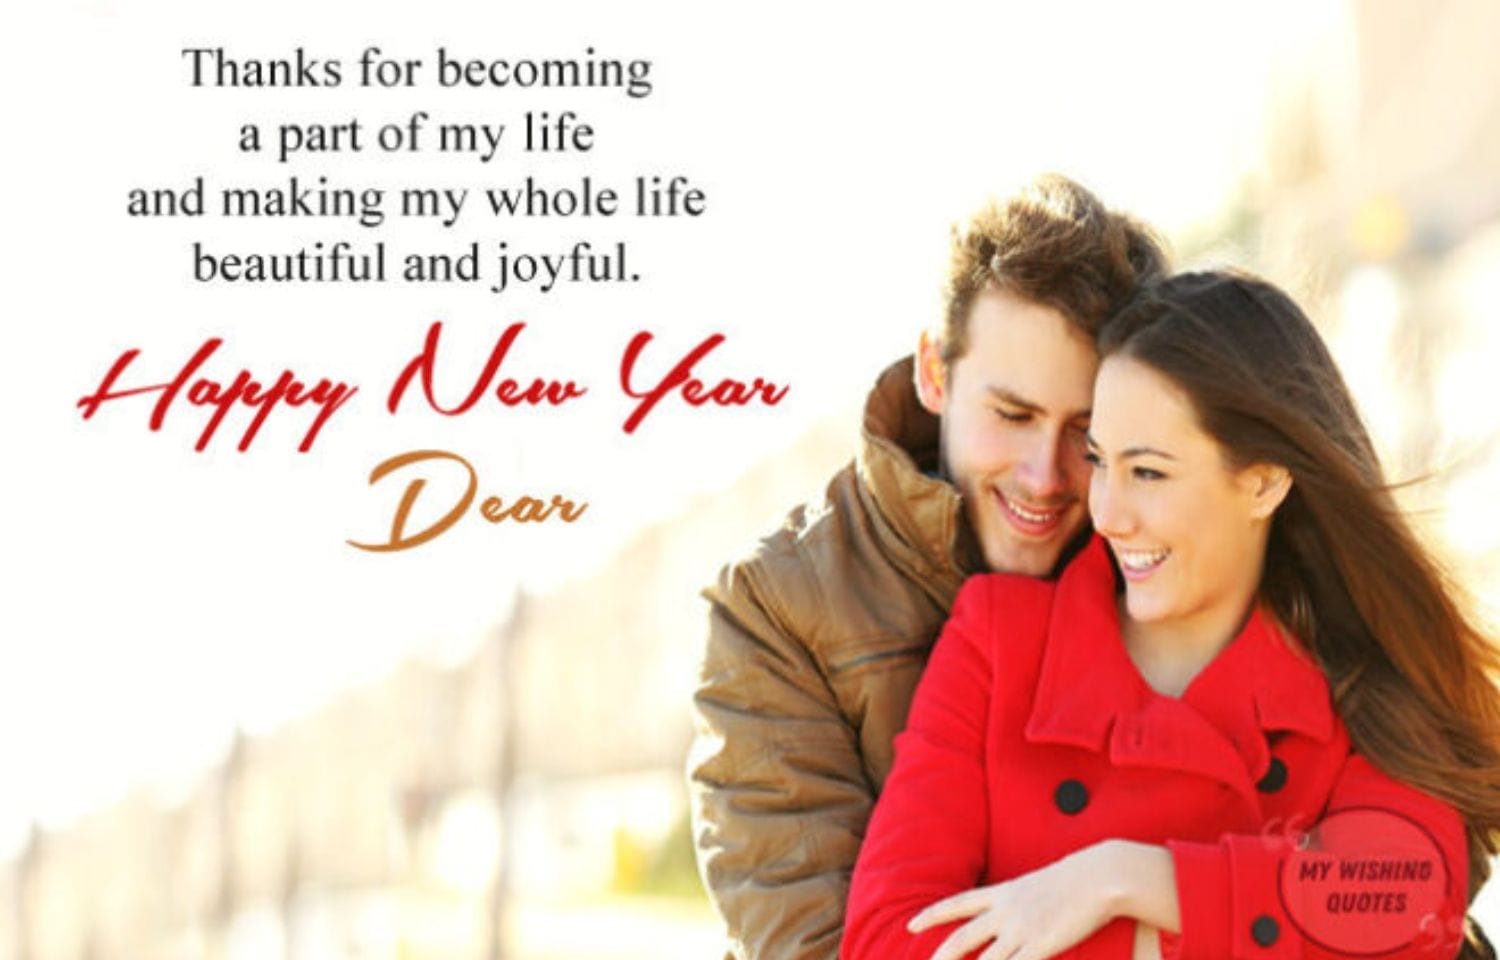 New Year Wishes for Boyfriend